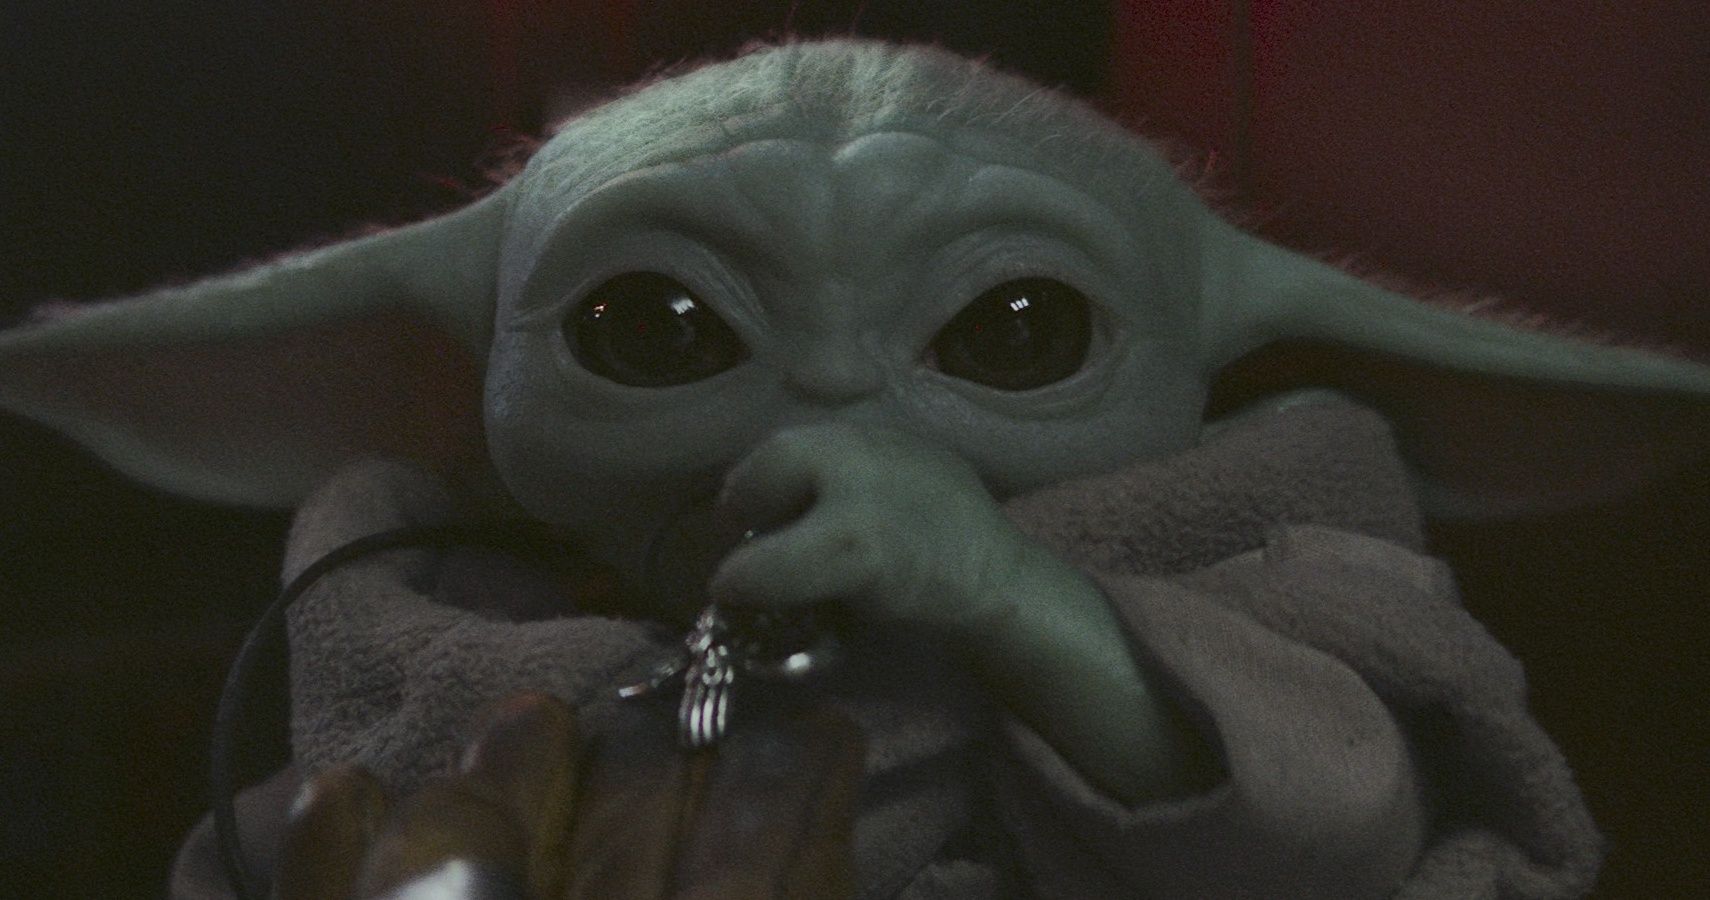 When You Connect To Plane Wifi Baby Yoda Make A Meme